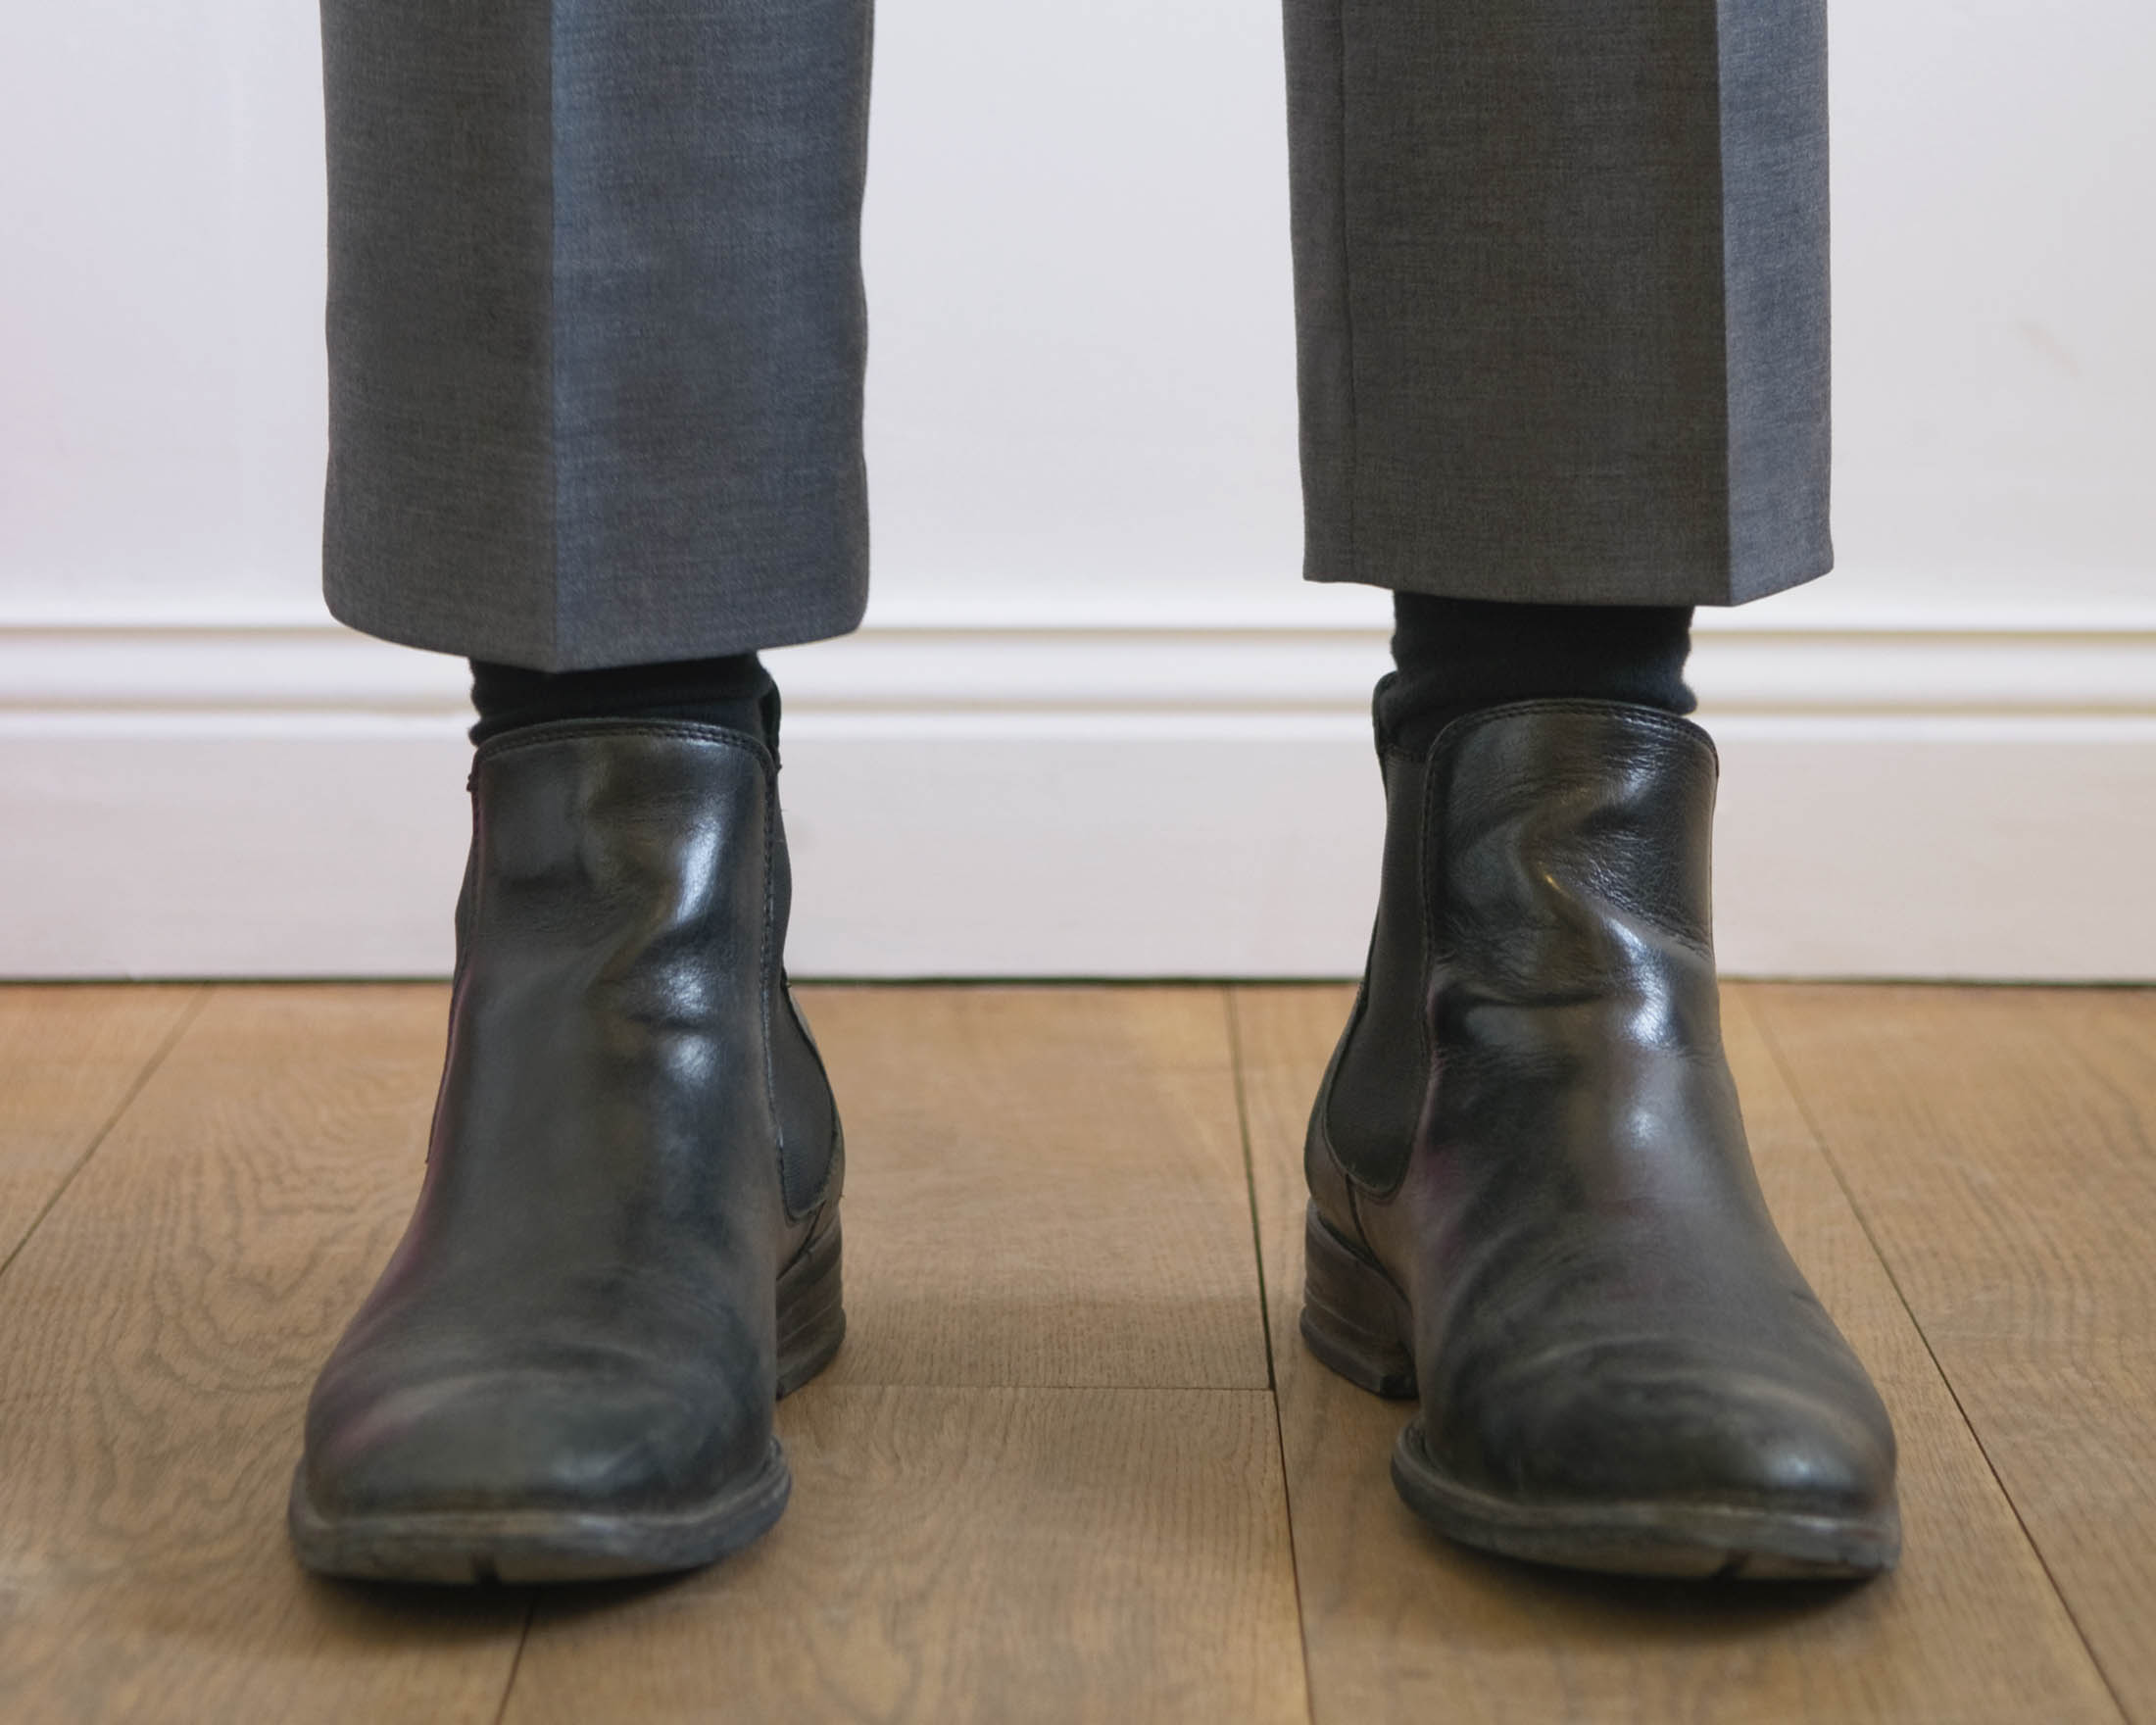 Should Men Wear Cuffed Pants A Guide To Trouser Cuffs